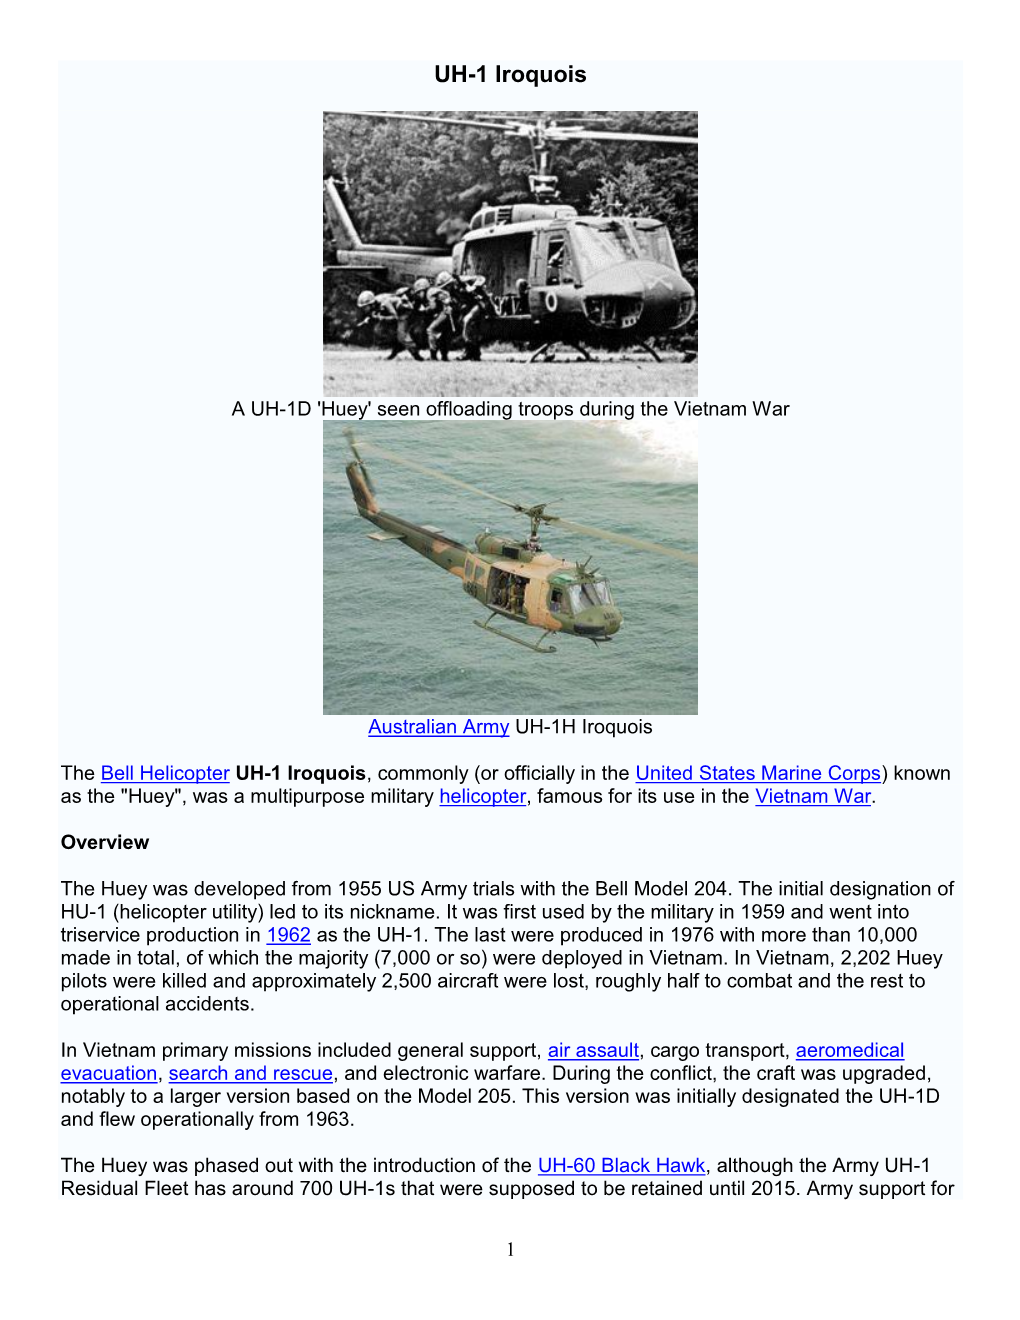 Australian Army UH-1H Iroquois